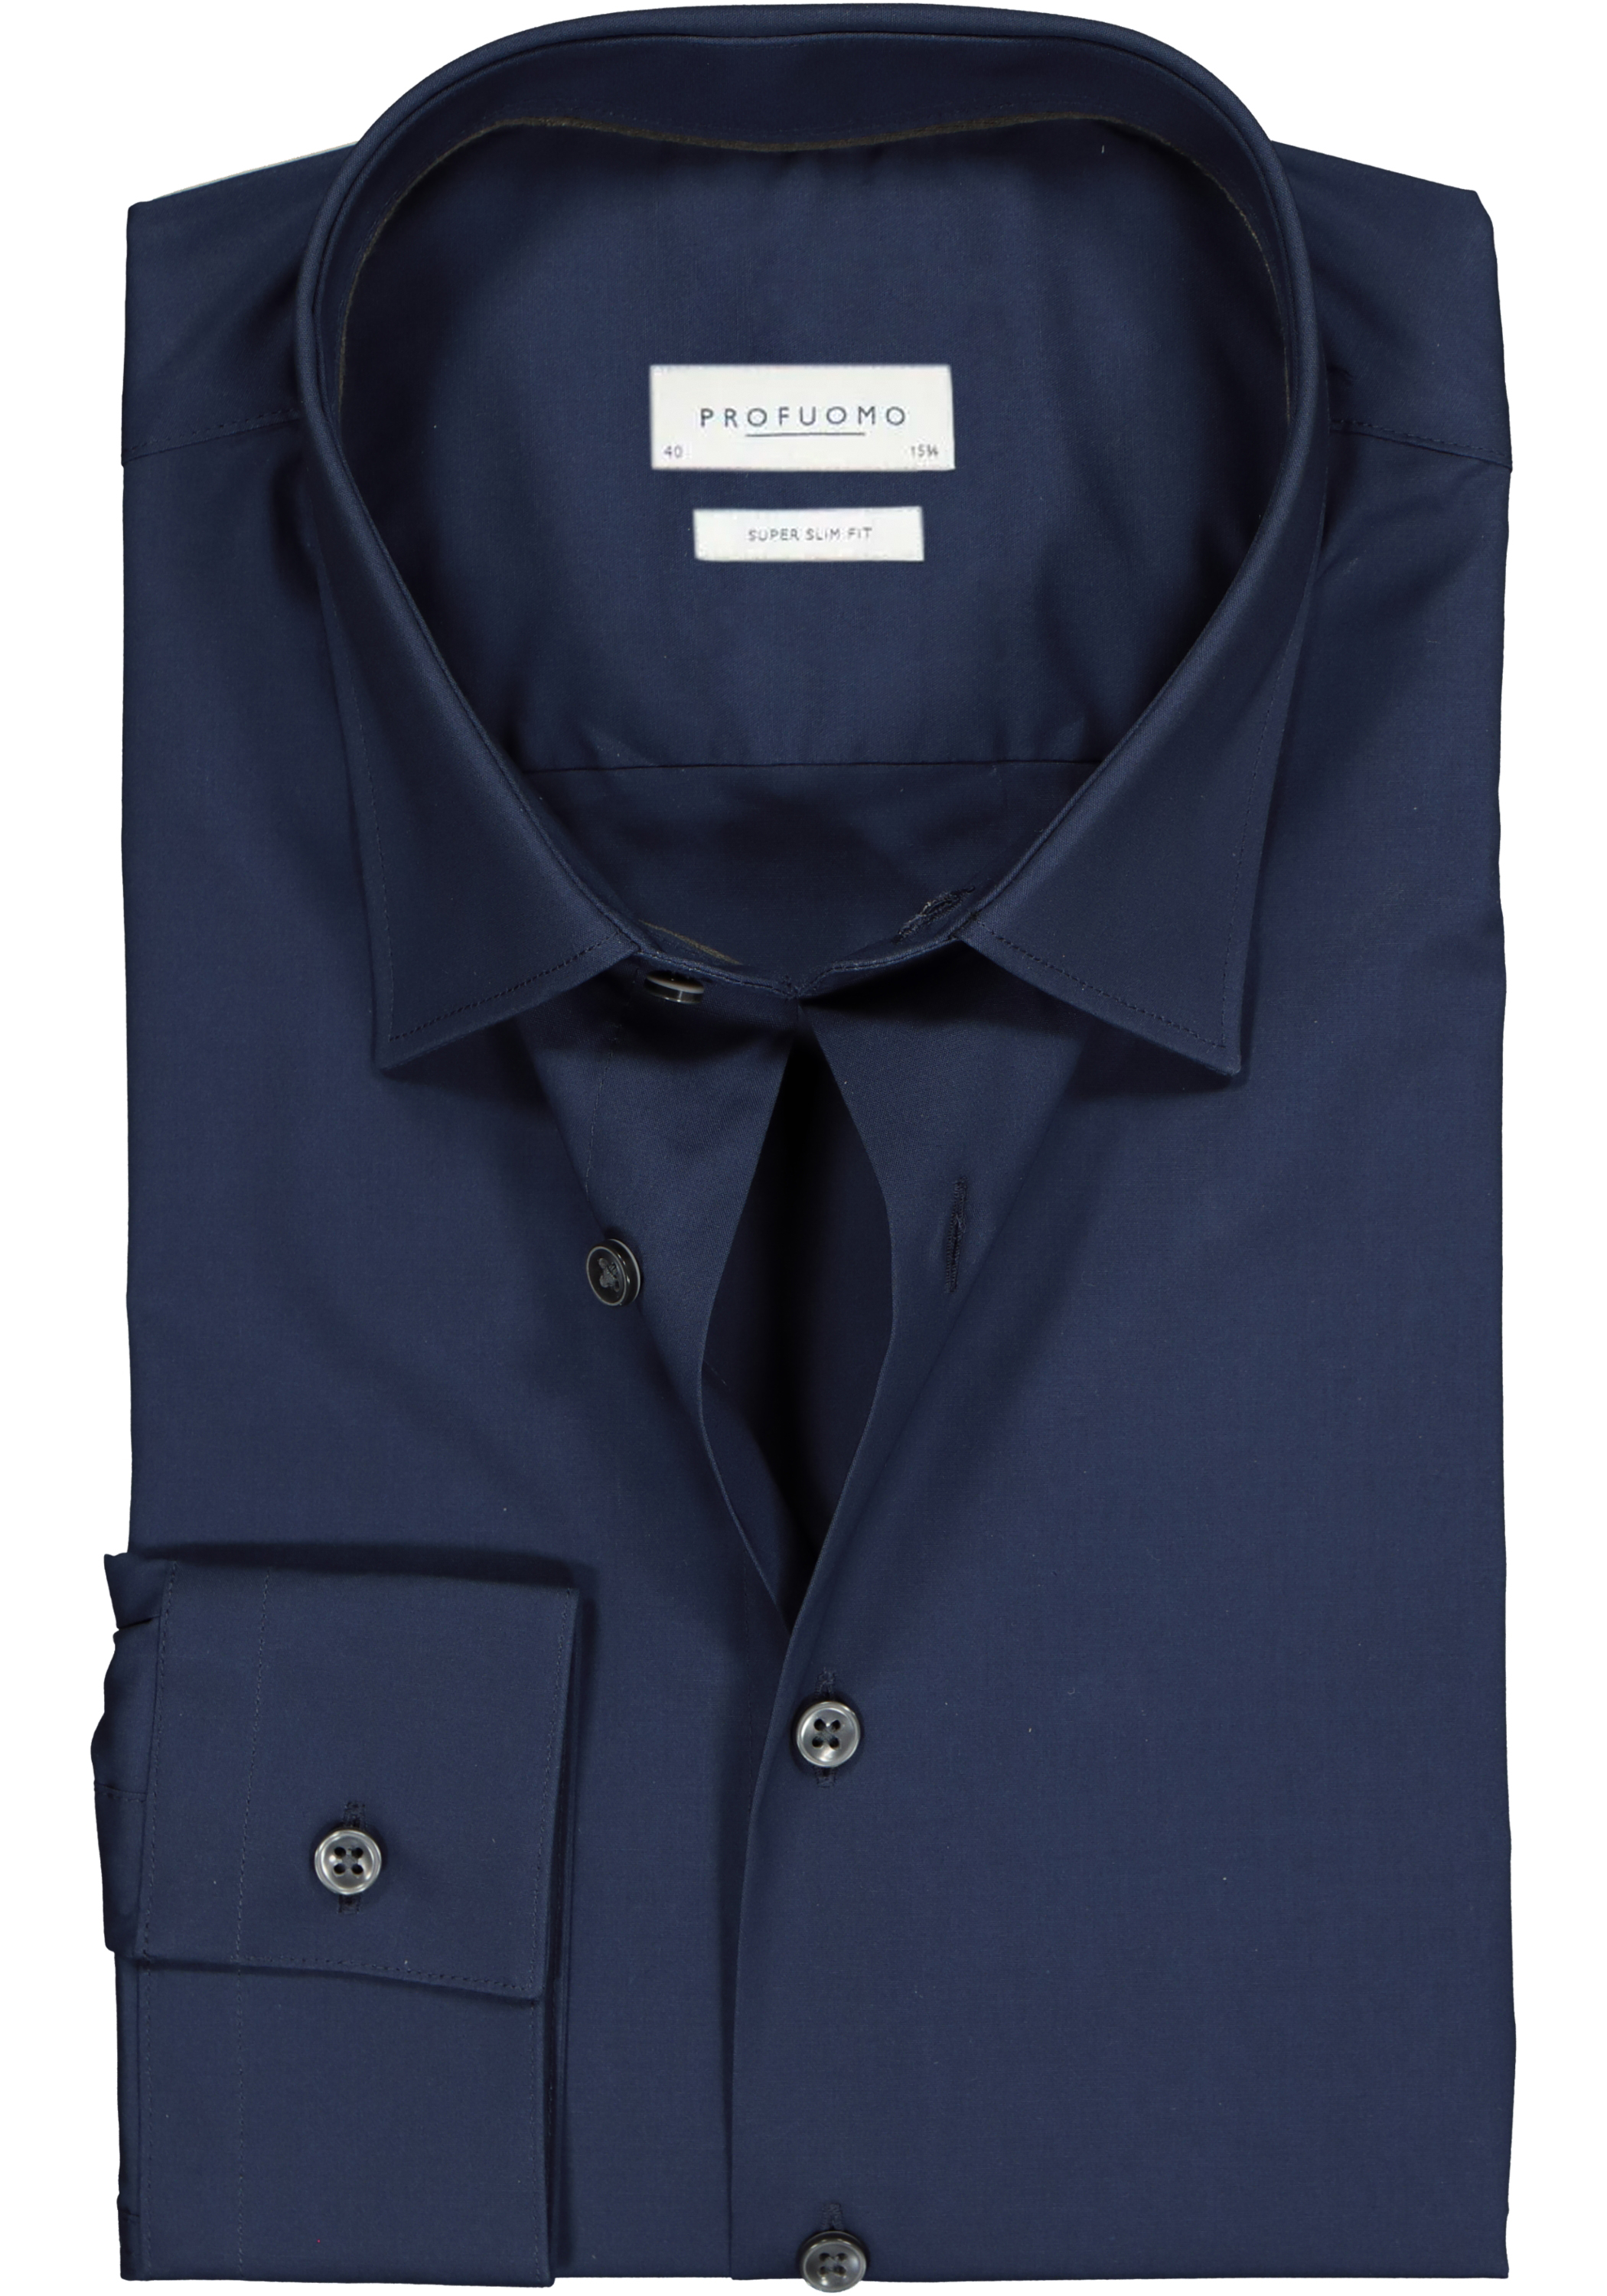 Profuomo super slim fit overhemd, stretch poplin, navy blauw